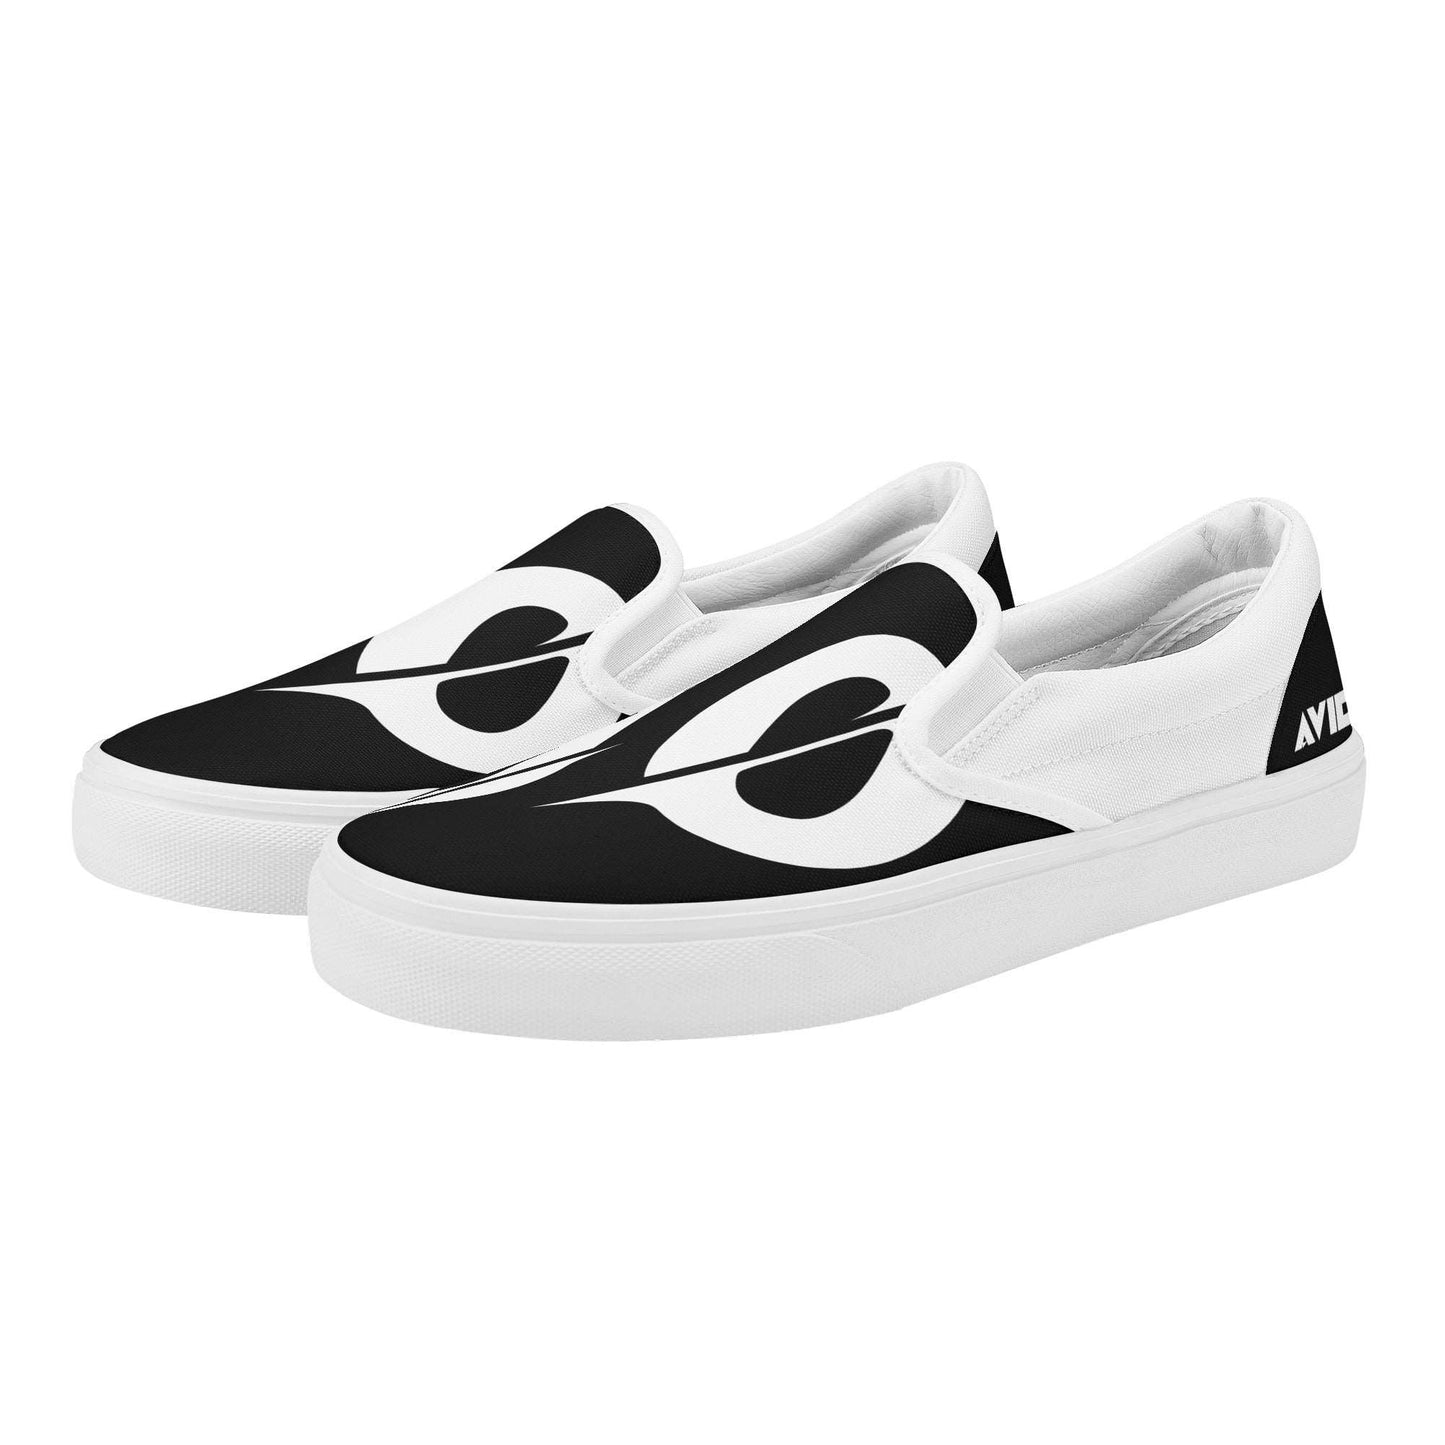 Dojo Shoe - Black and White